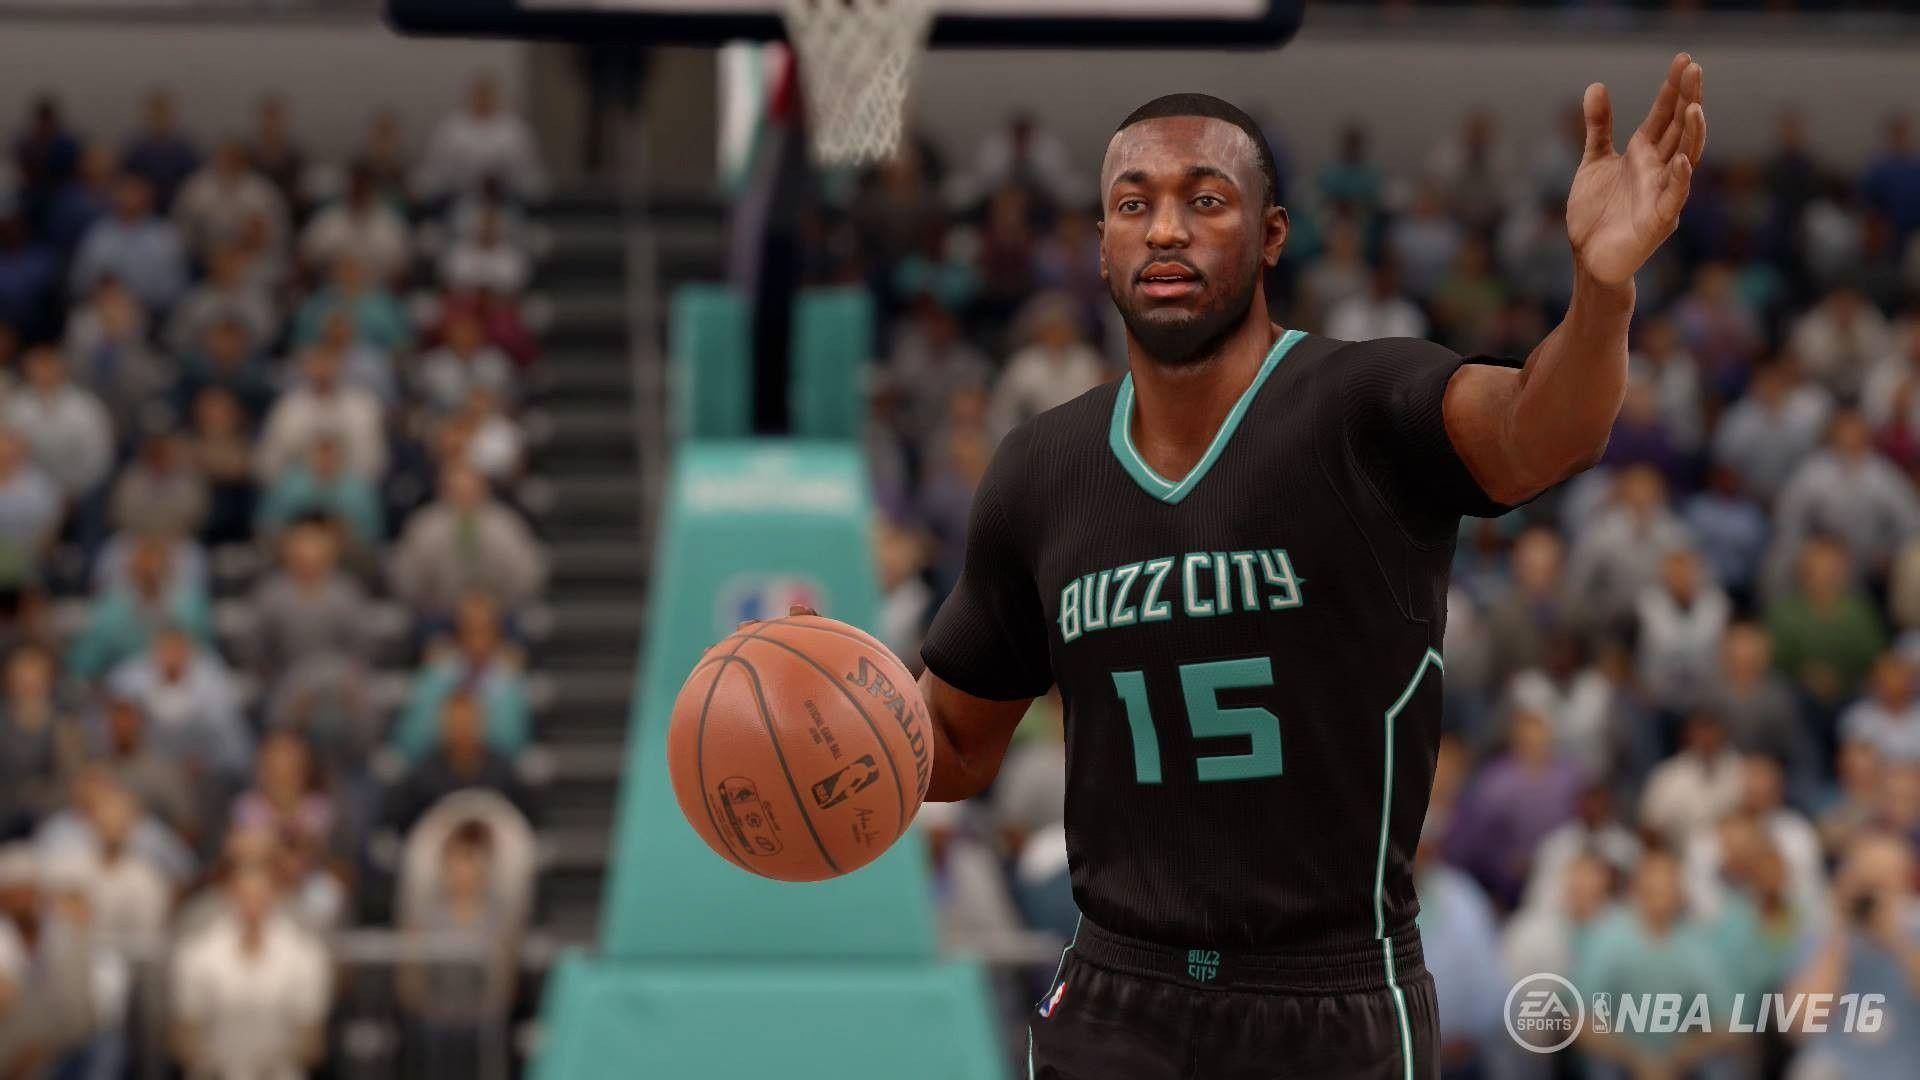 NBA Live 16 Screenshot Walker in Buzz City Uniform